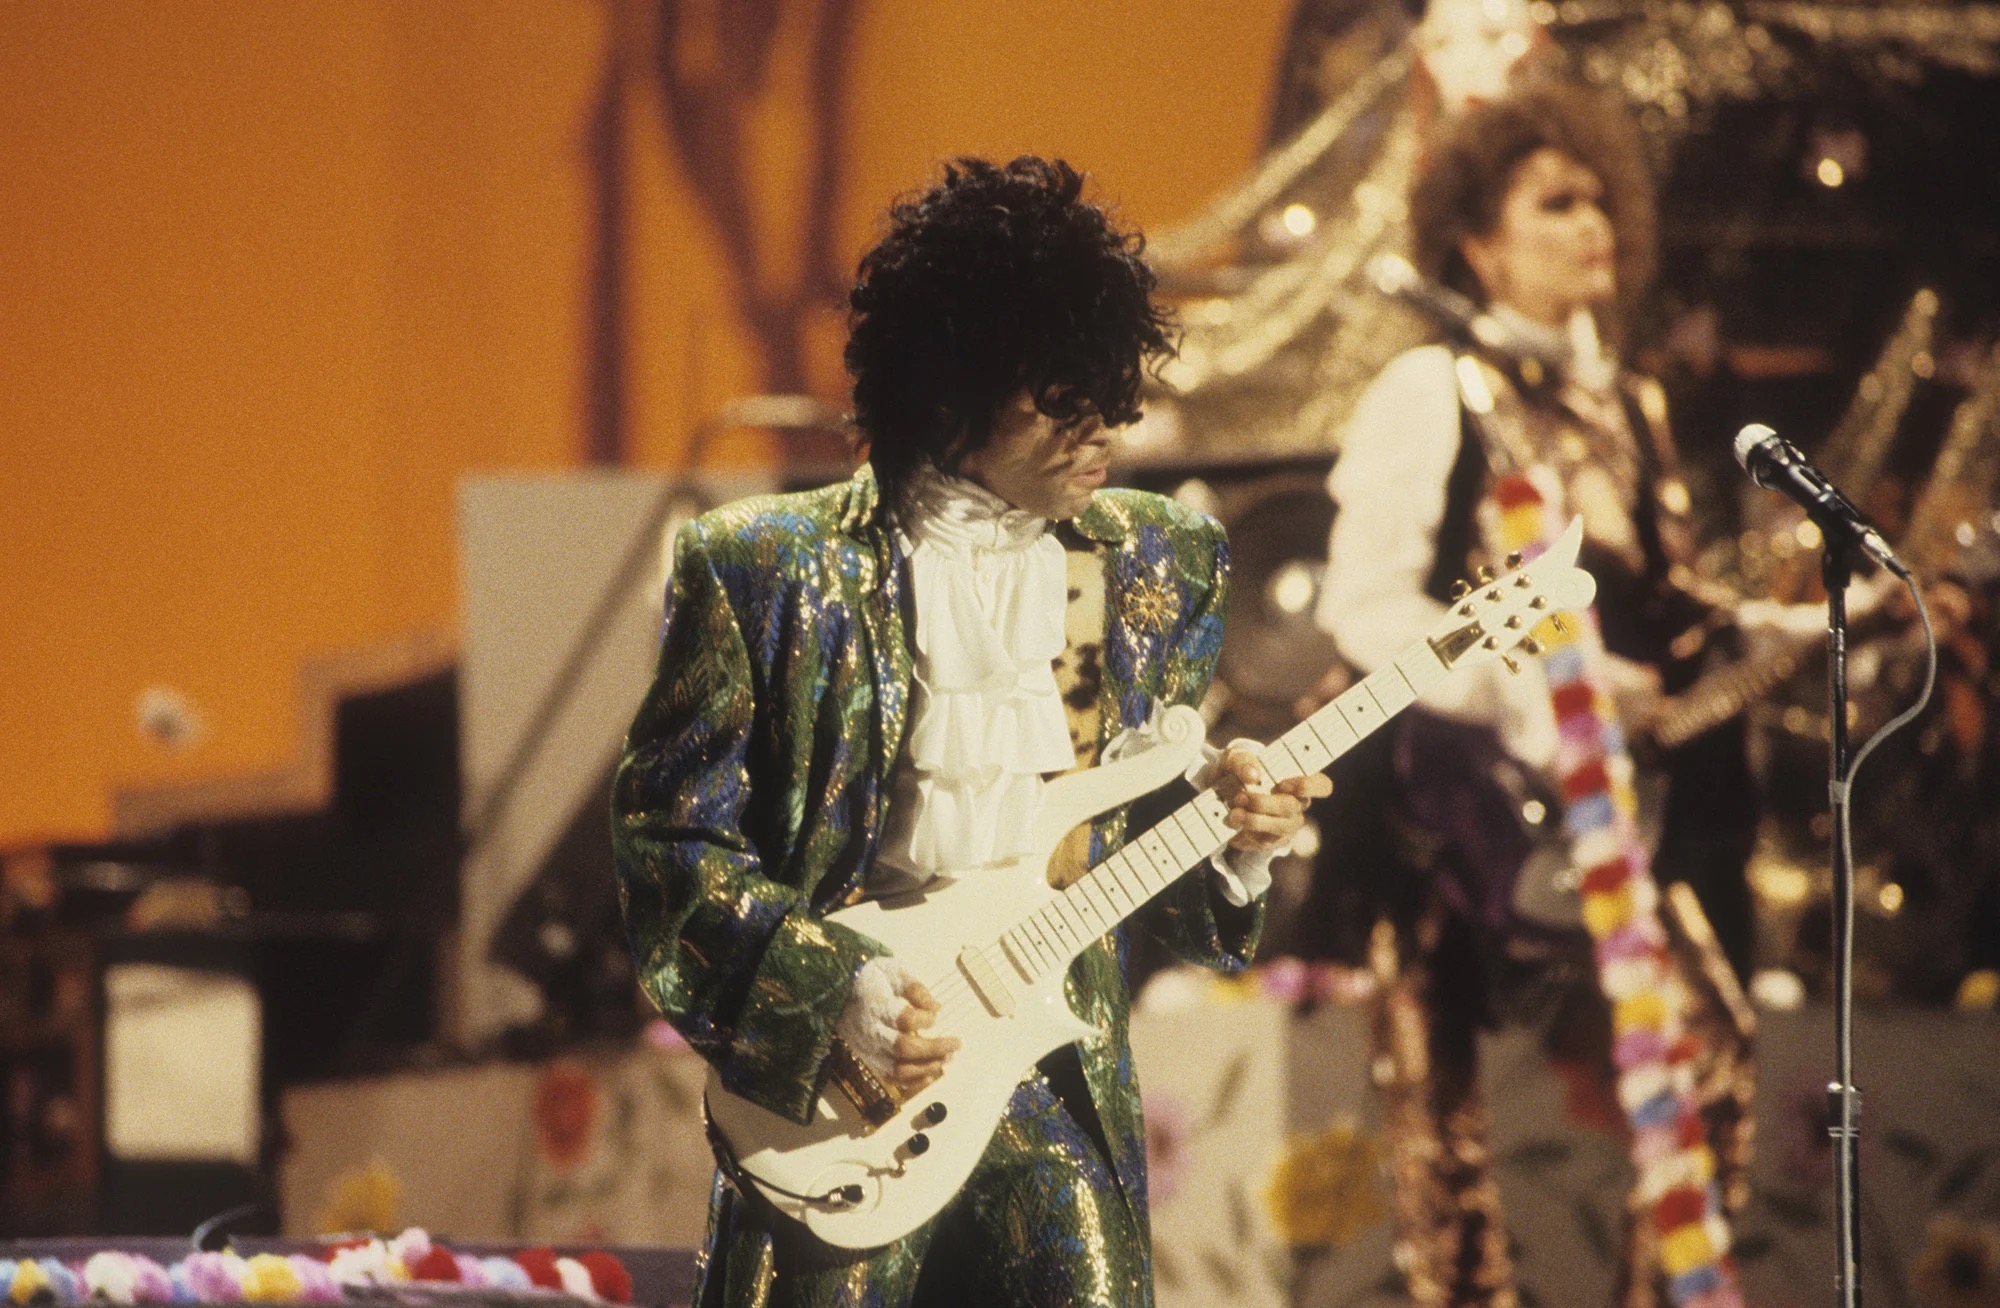 Chiếc áo sơ mi của cố ca sĩ Prince được bán đấu giá 15.000 USD